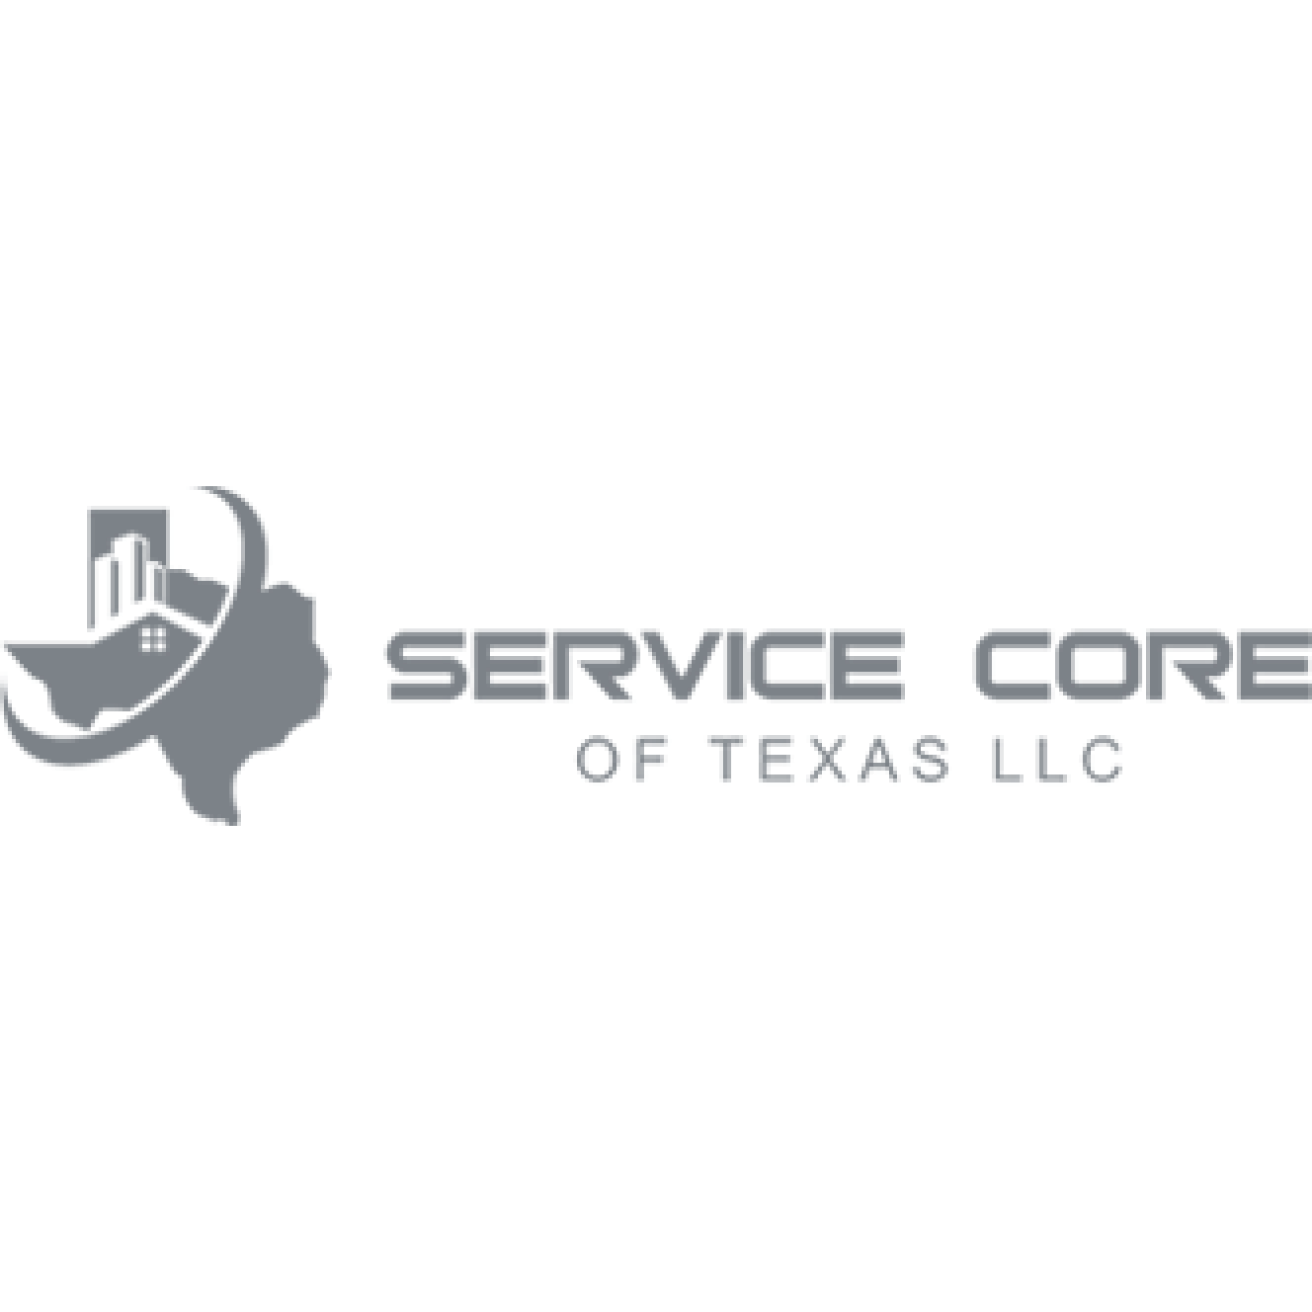 SERVICE CORE OF TEXAS LLC